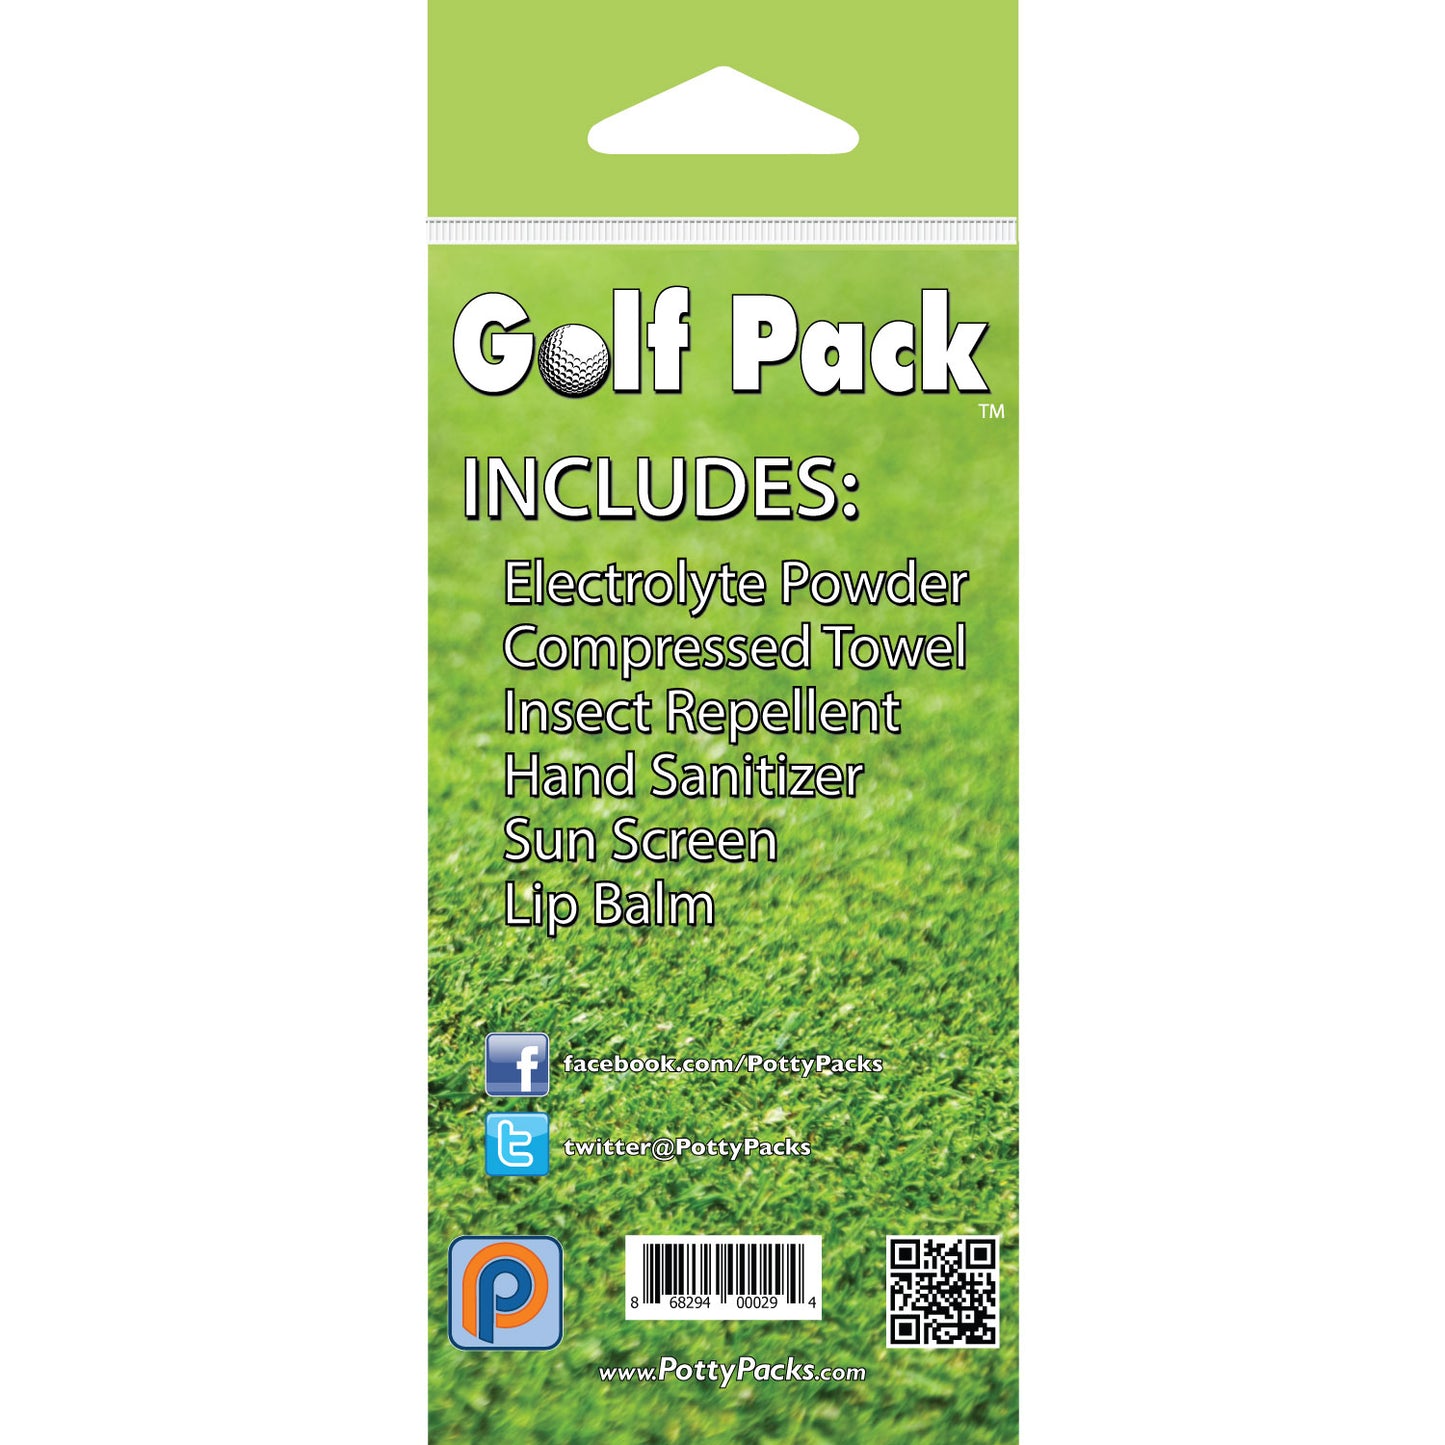 Golf Pack